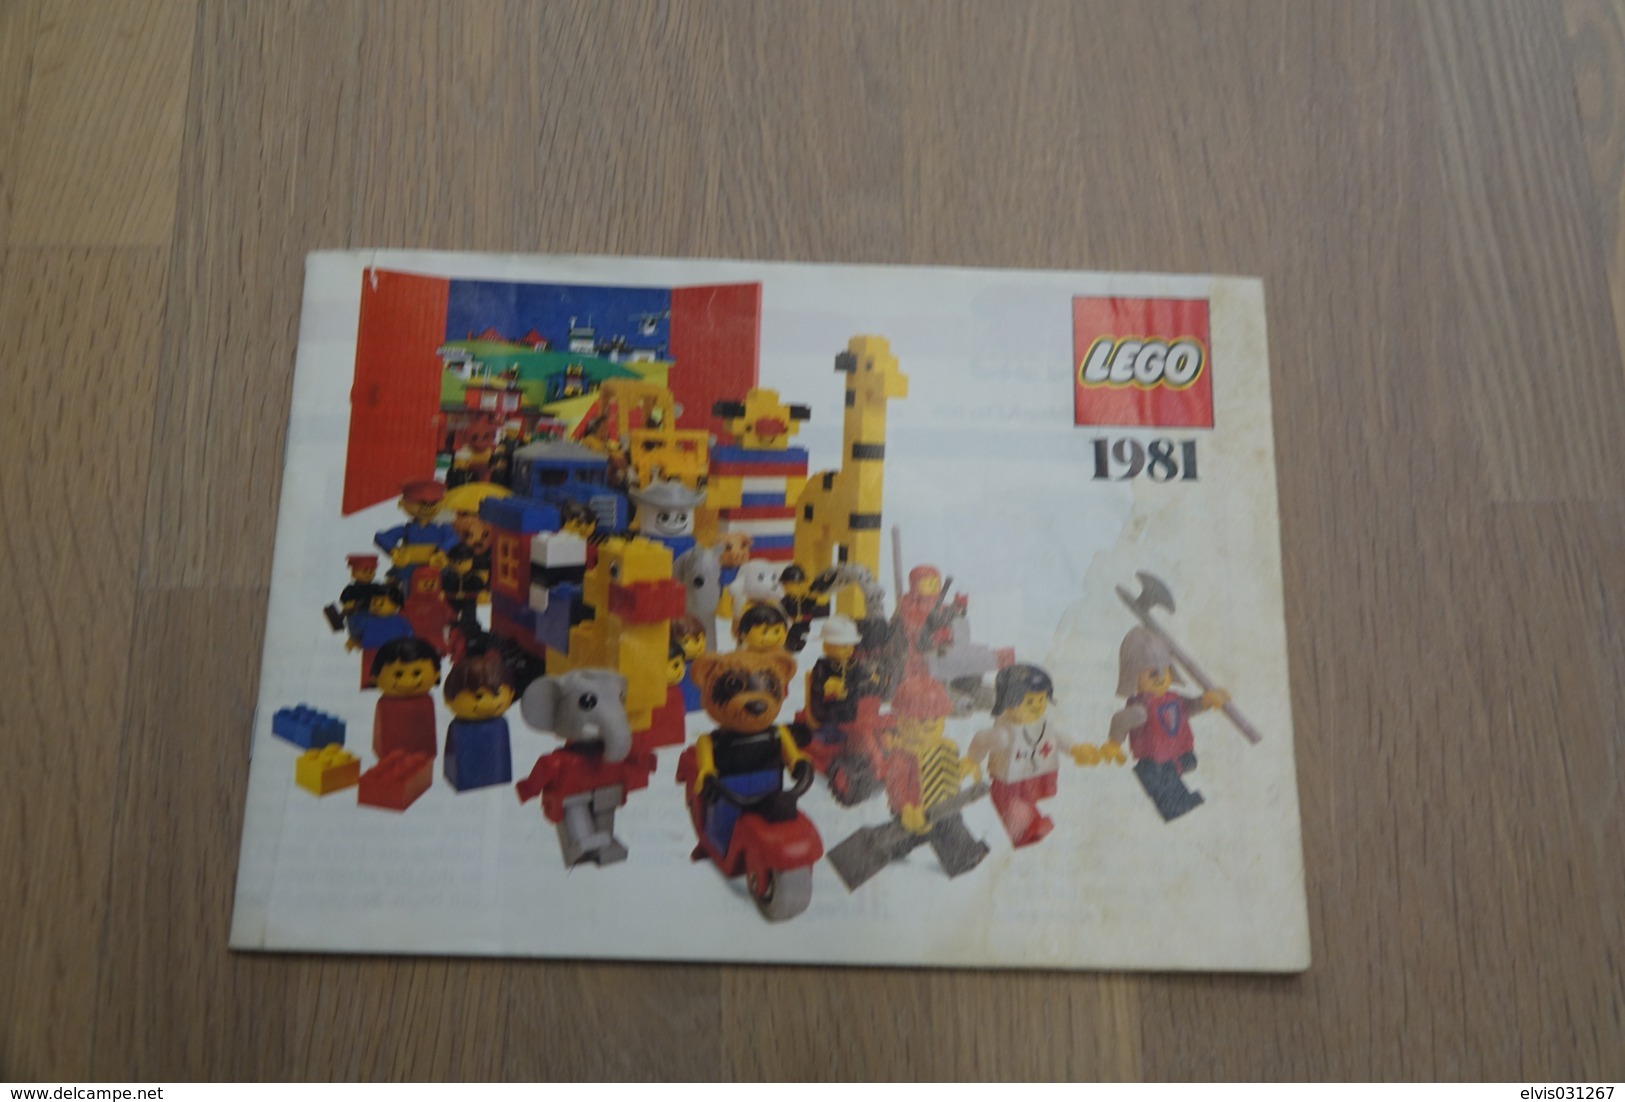 LEGO - CATALOG 1981 - Original Lego 1981 - Vintage - EN - Big - Catalogi